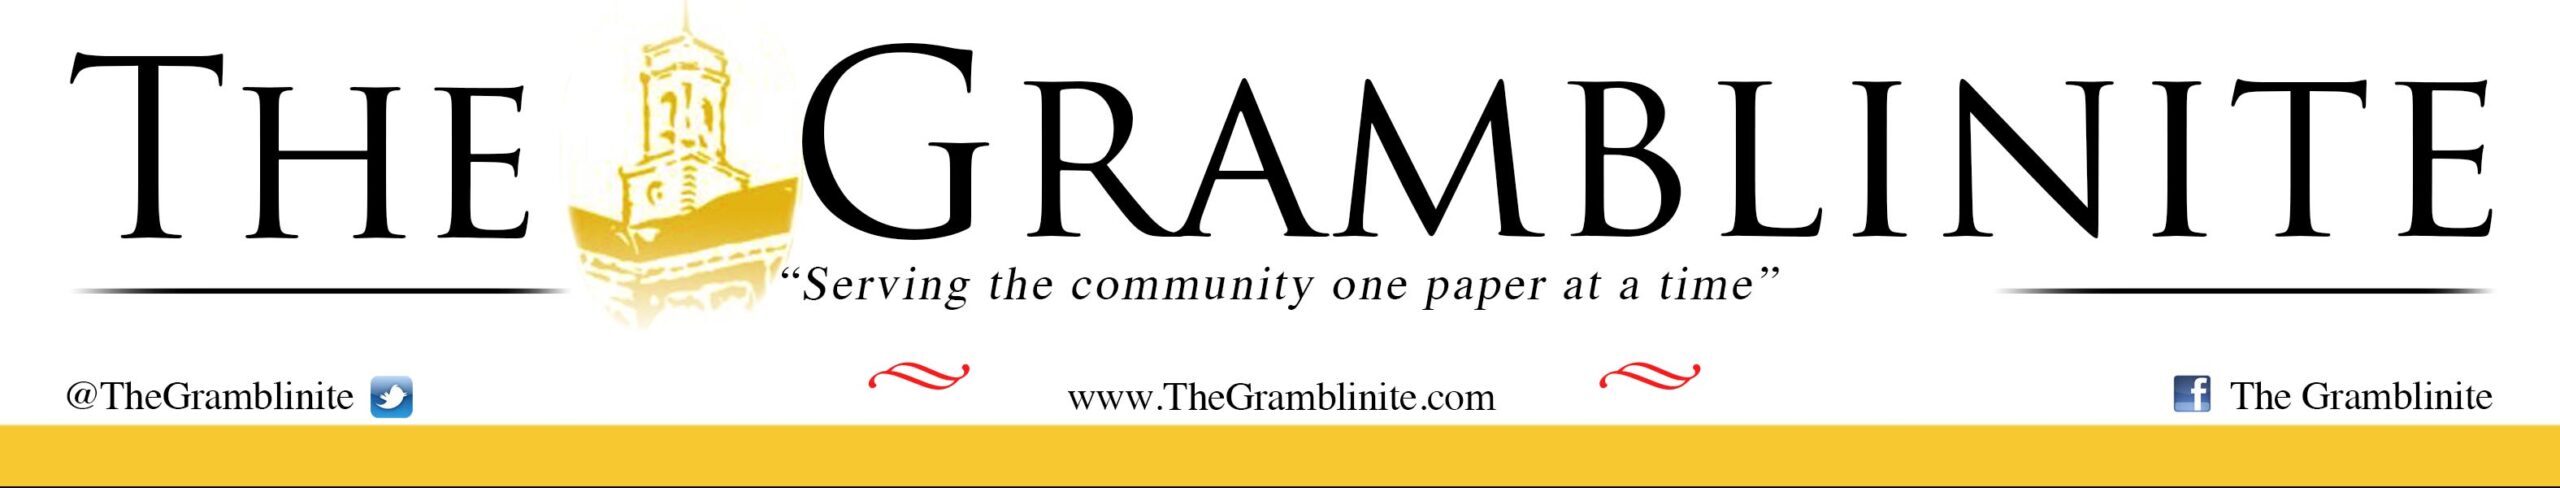 The Gramblinite